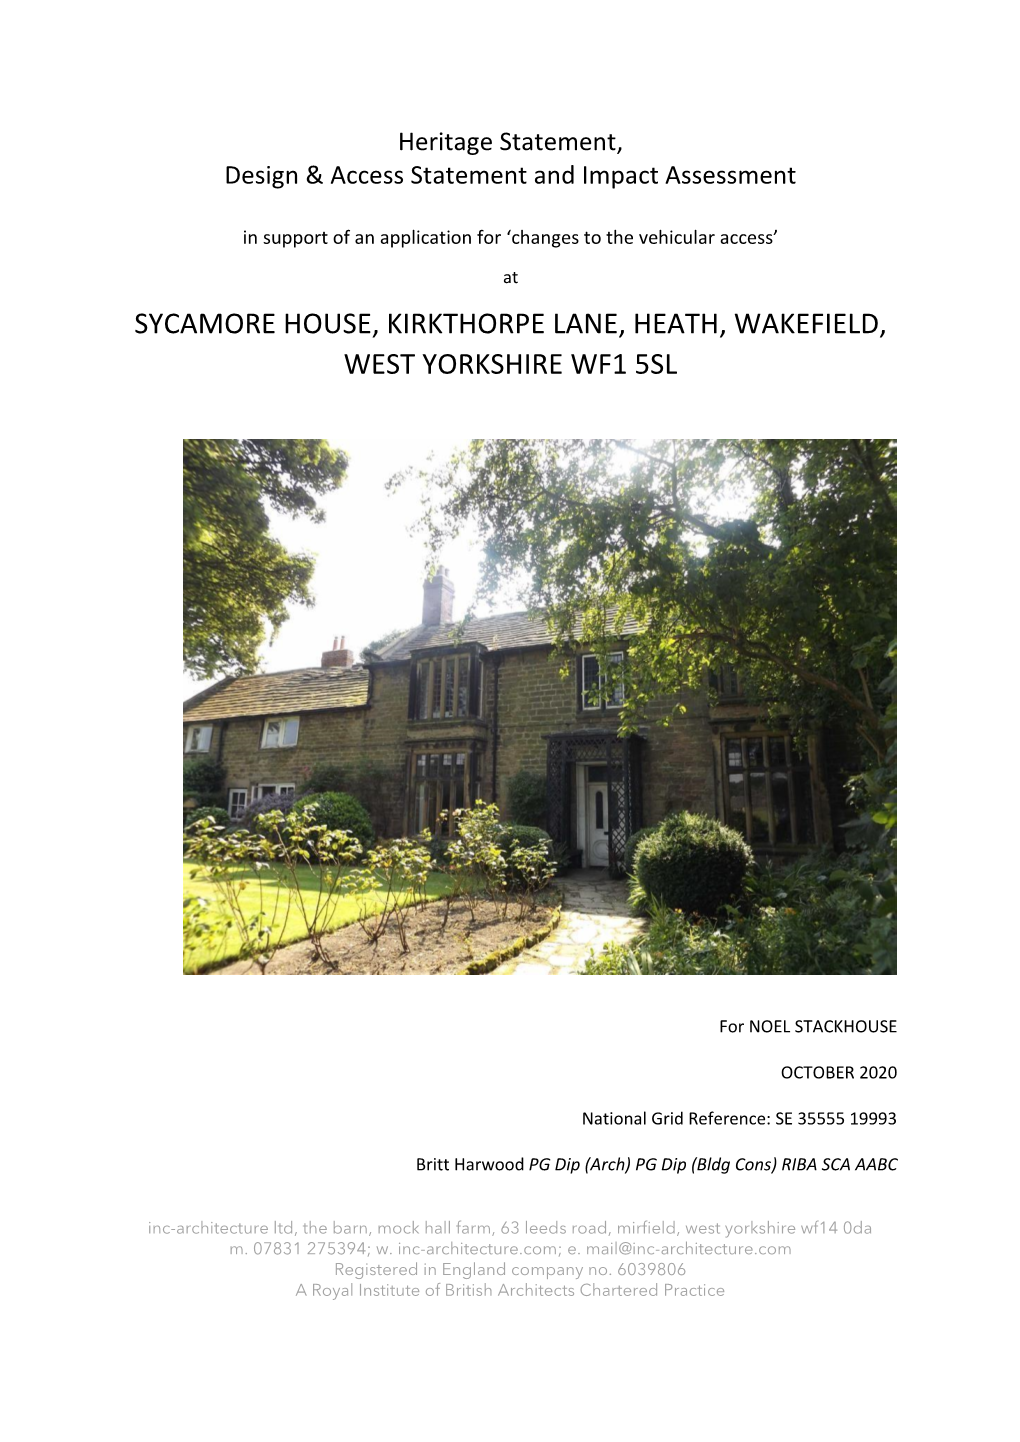 Sycamore House, Kirkthorpe Lane, Heath, Wakefield, West Yorkshire Wf1 5Sl